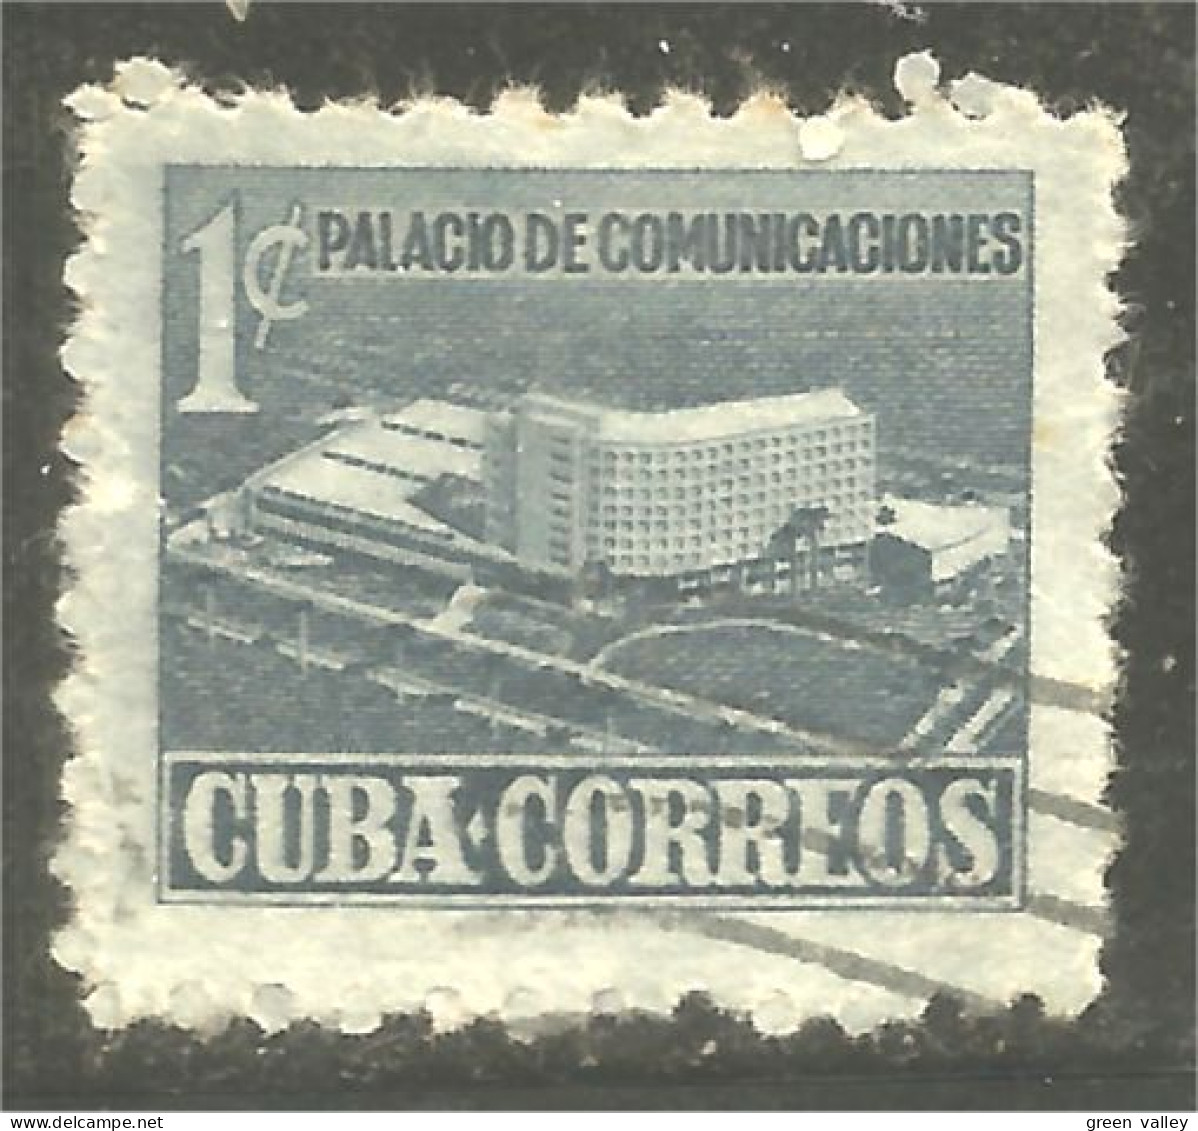 XW01-1982 Cuba Postal Tax Stamp 1952 1c Blue Bleu - Wohlfahrtsmarken